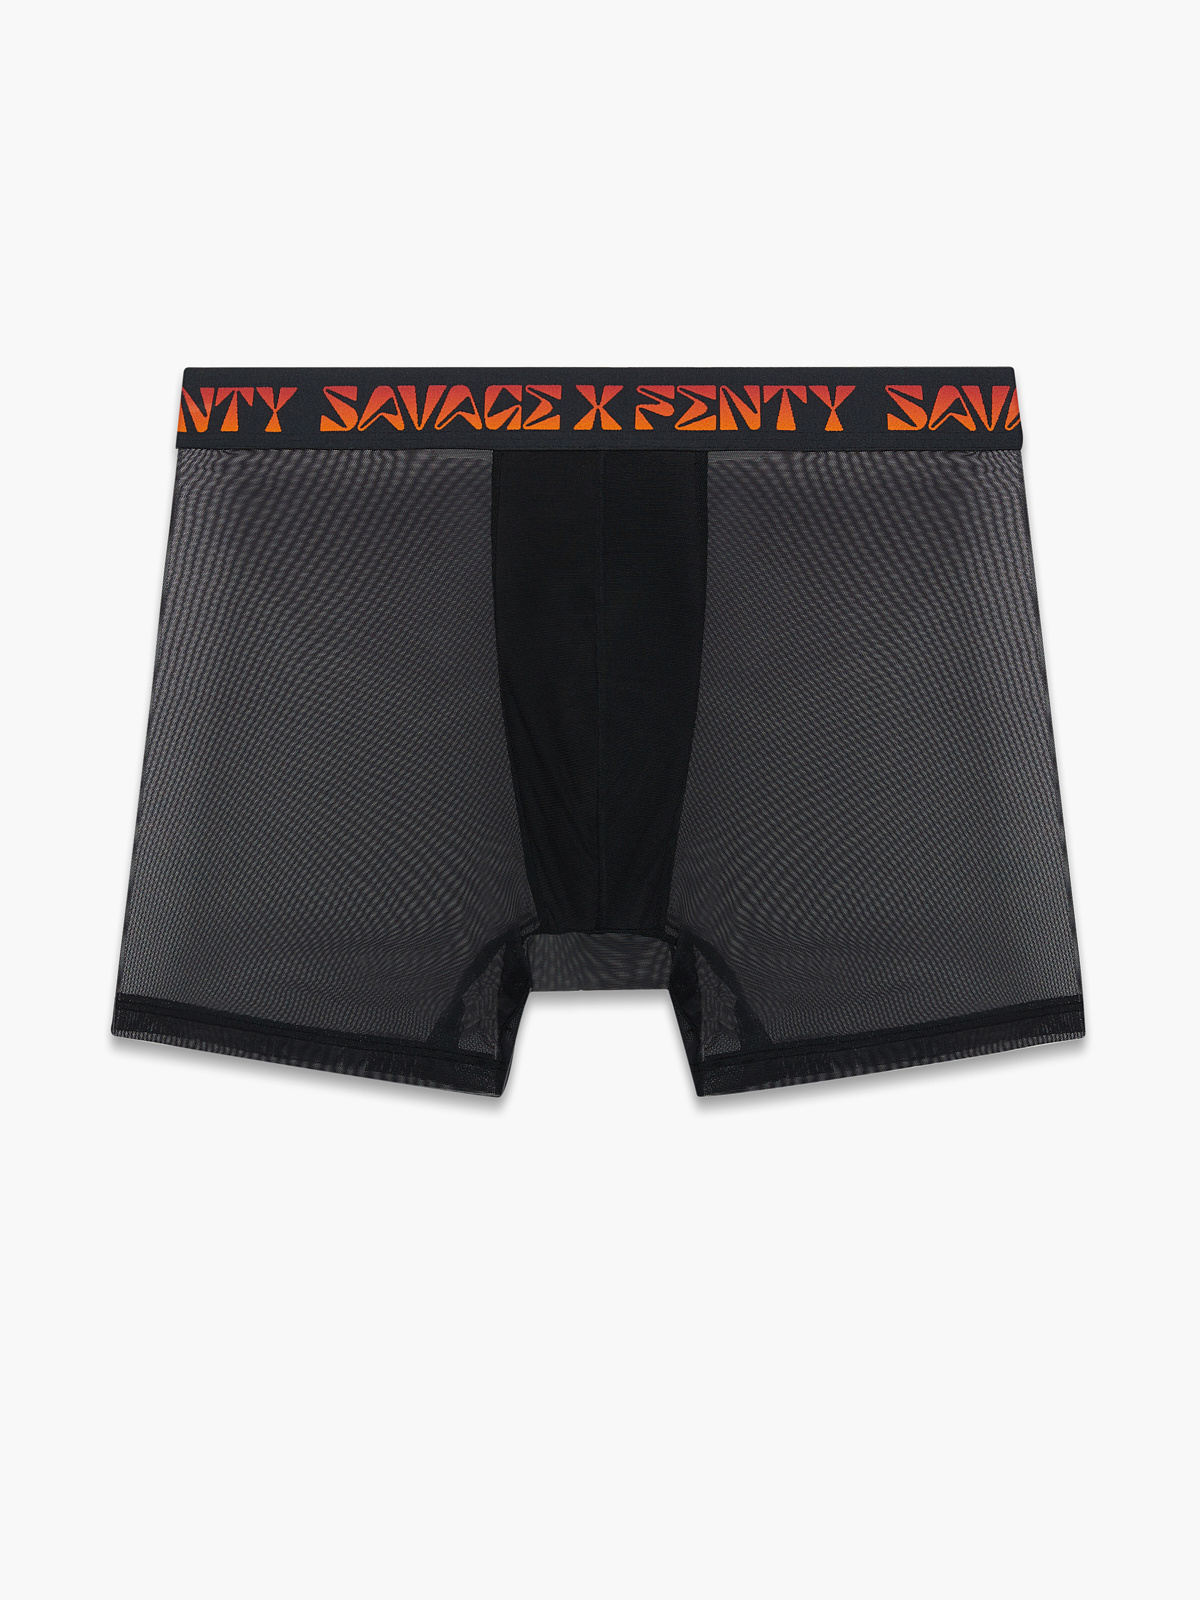 I Dare Hue Mesh Boxer Briefs in Black | SAVAGE X FENTY UK United Kingdom